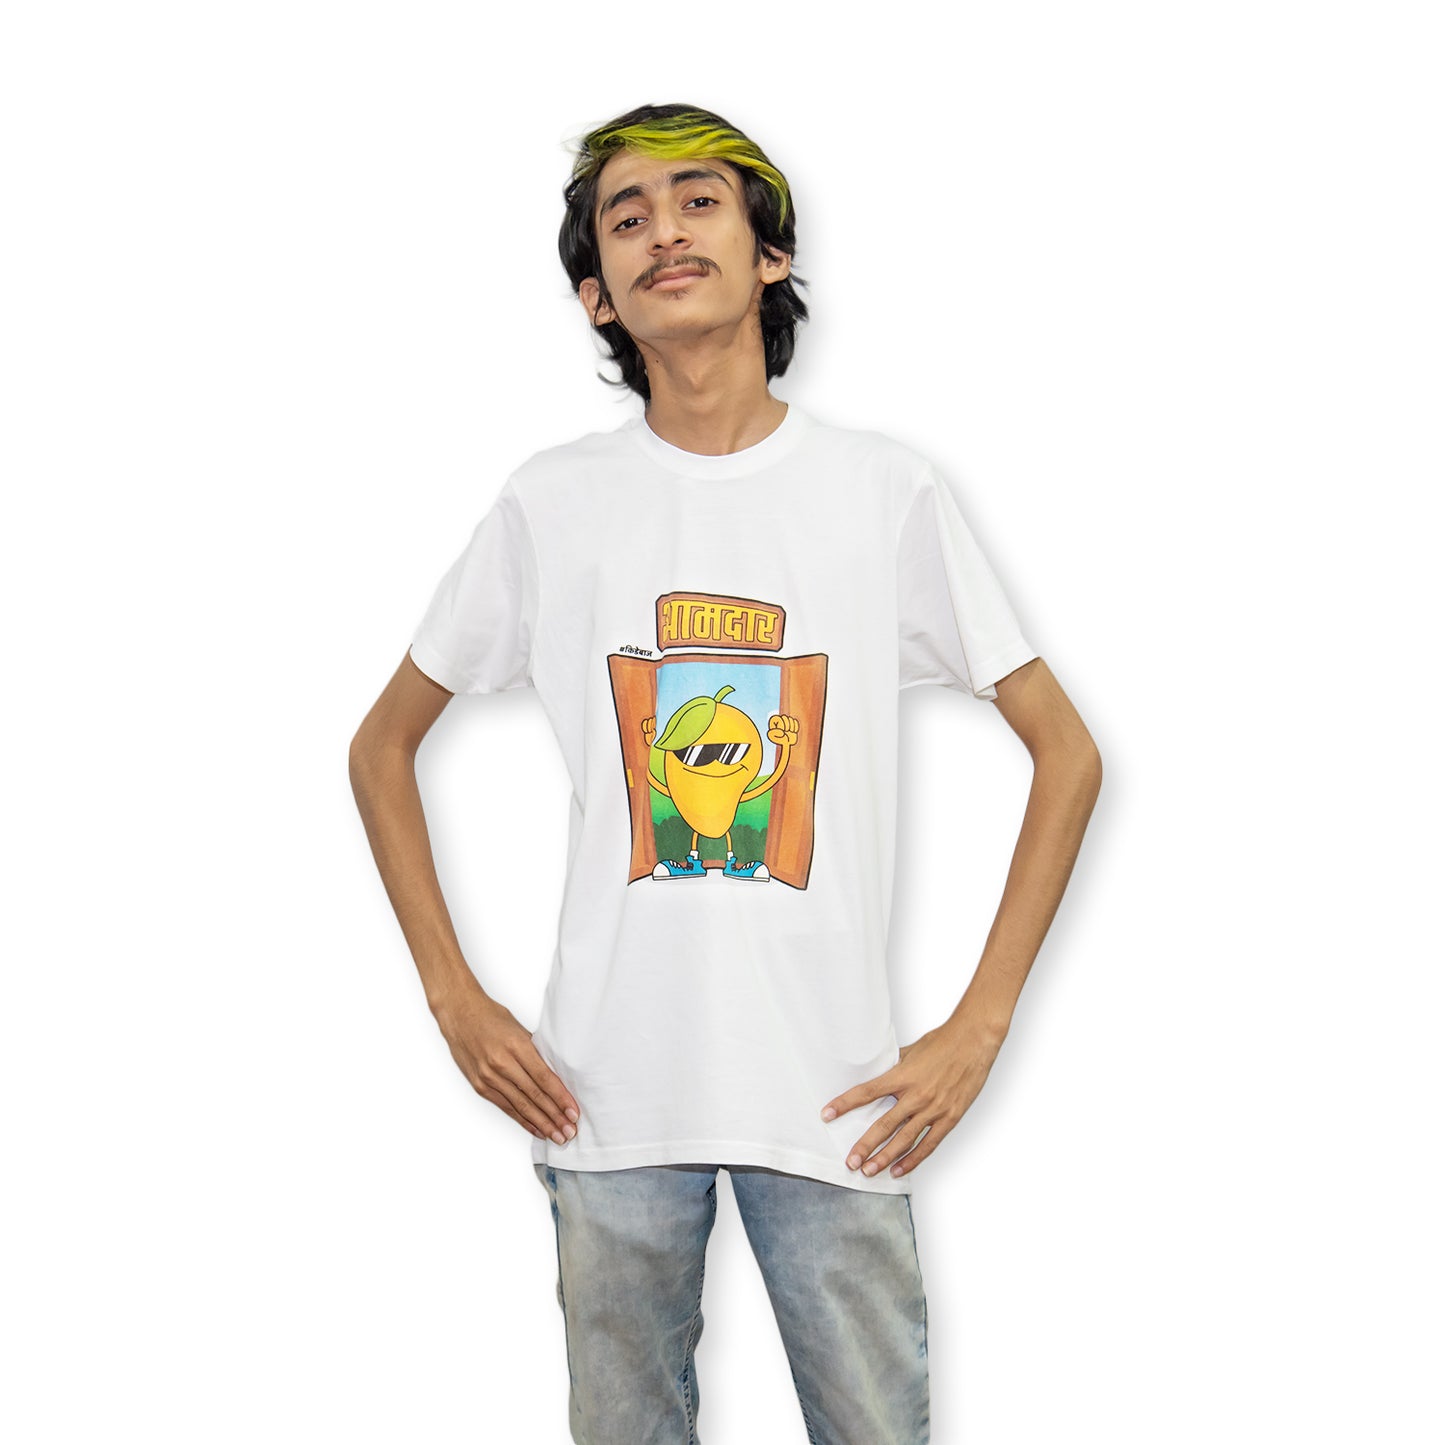 Aamdaar T-Shirt - Kidebaj